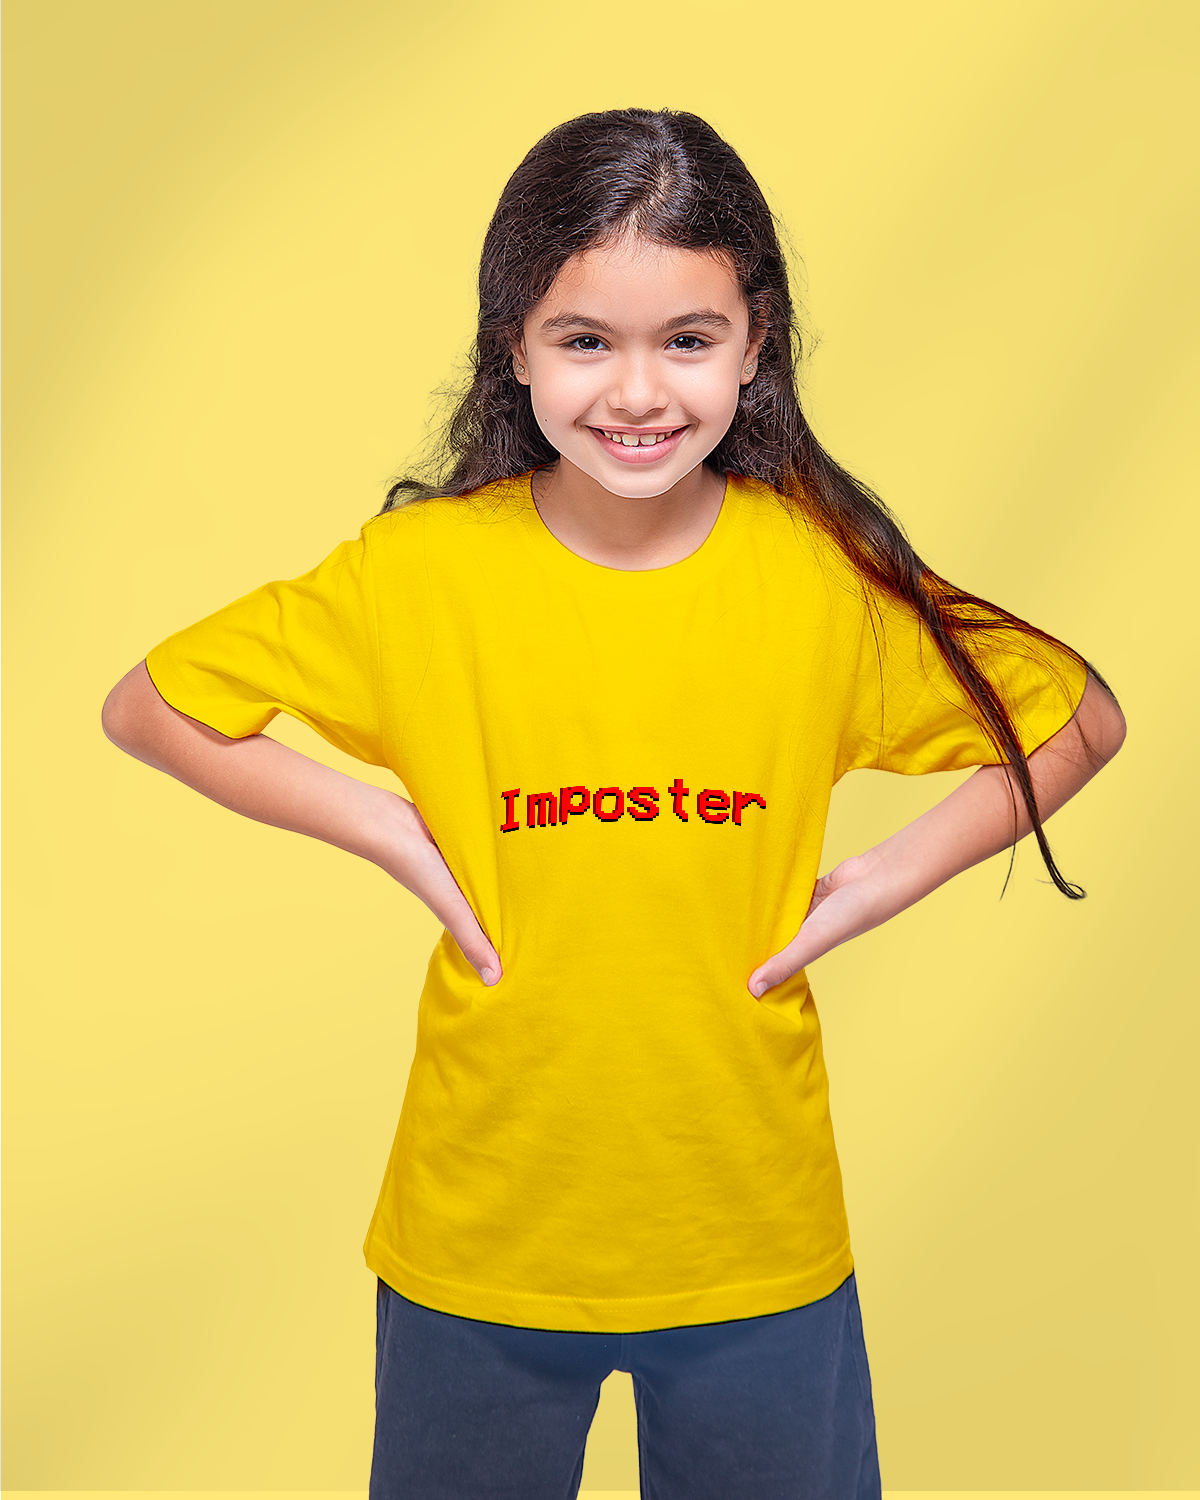 T-shirt For Girls (Imposter)